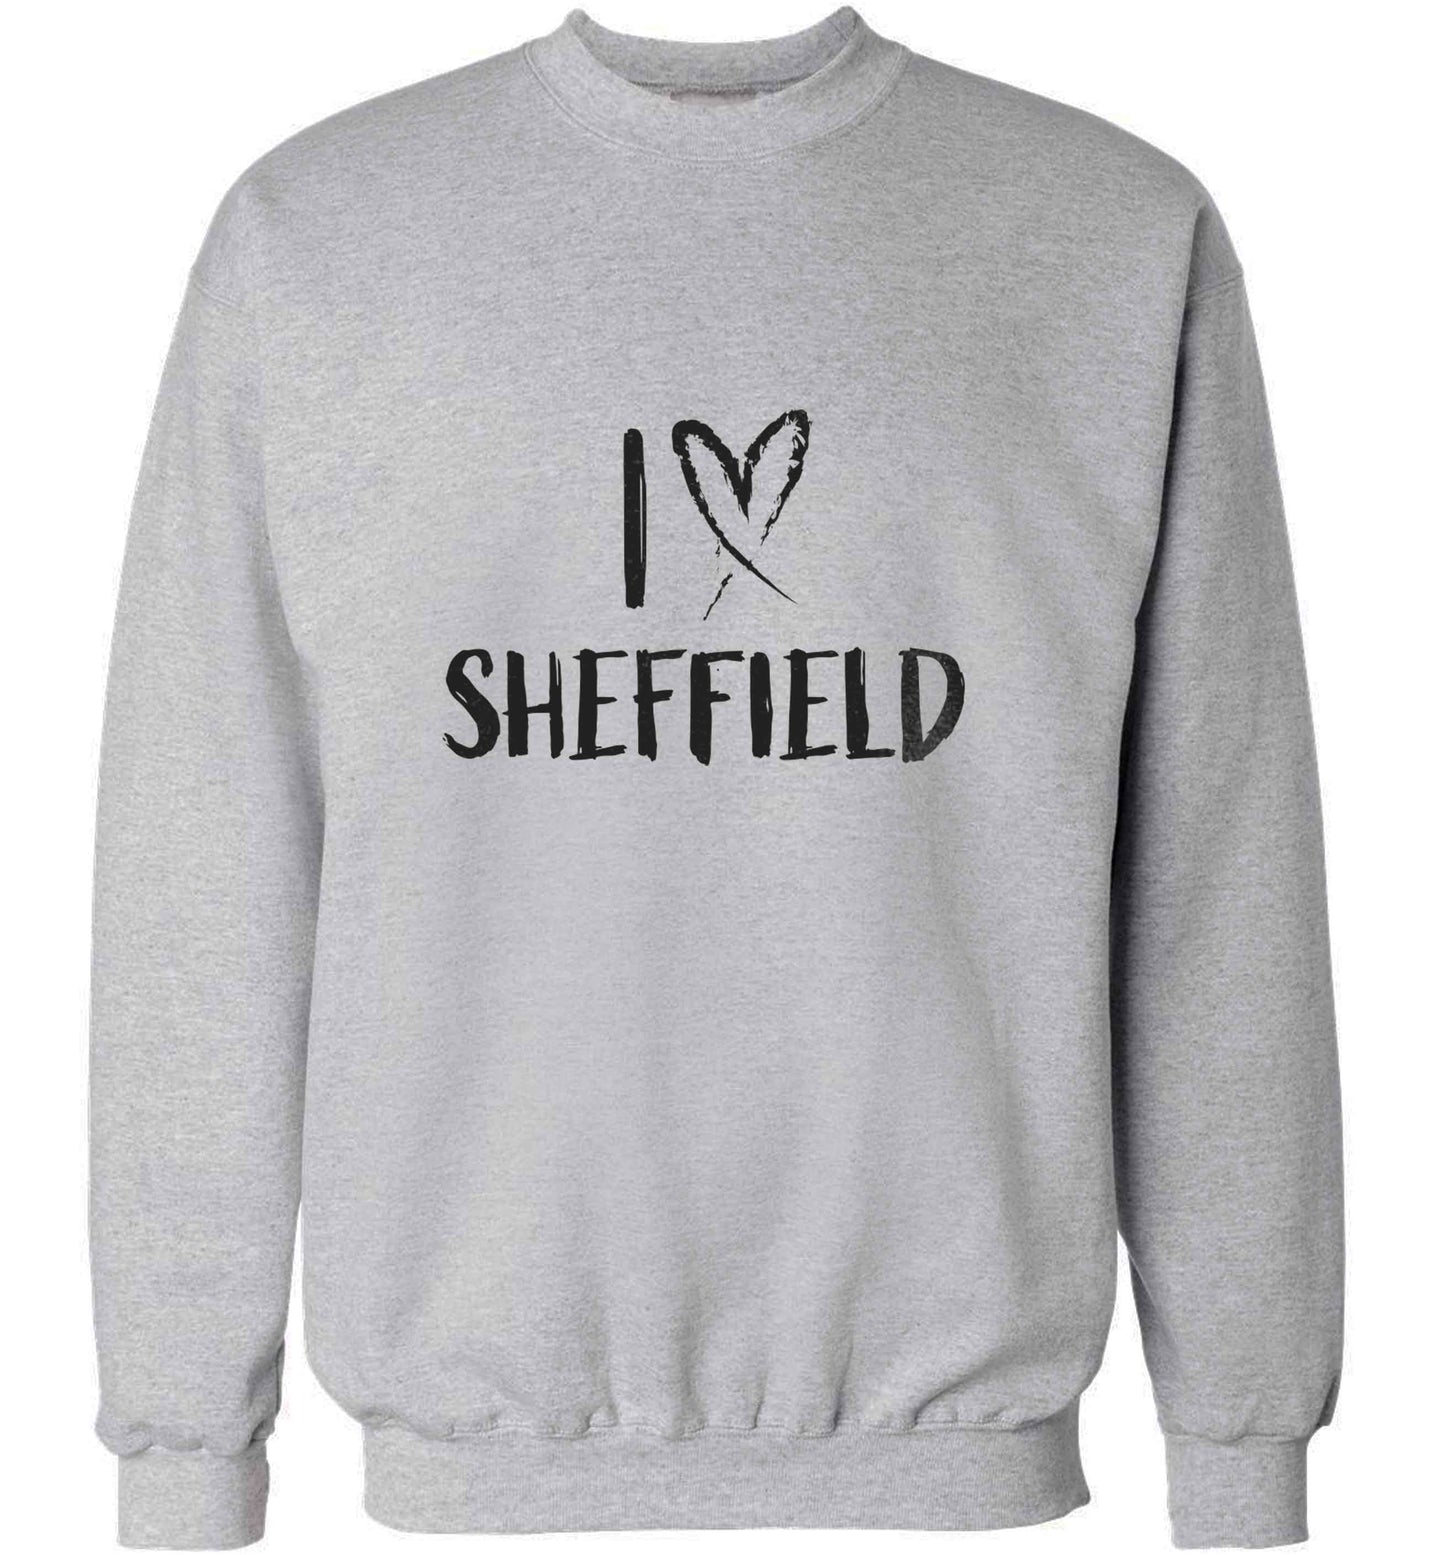 I love Sheffield adult's unisex grey sweater 2XL